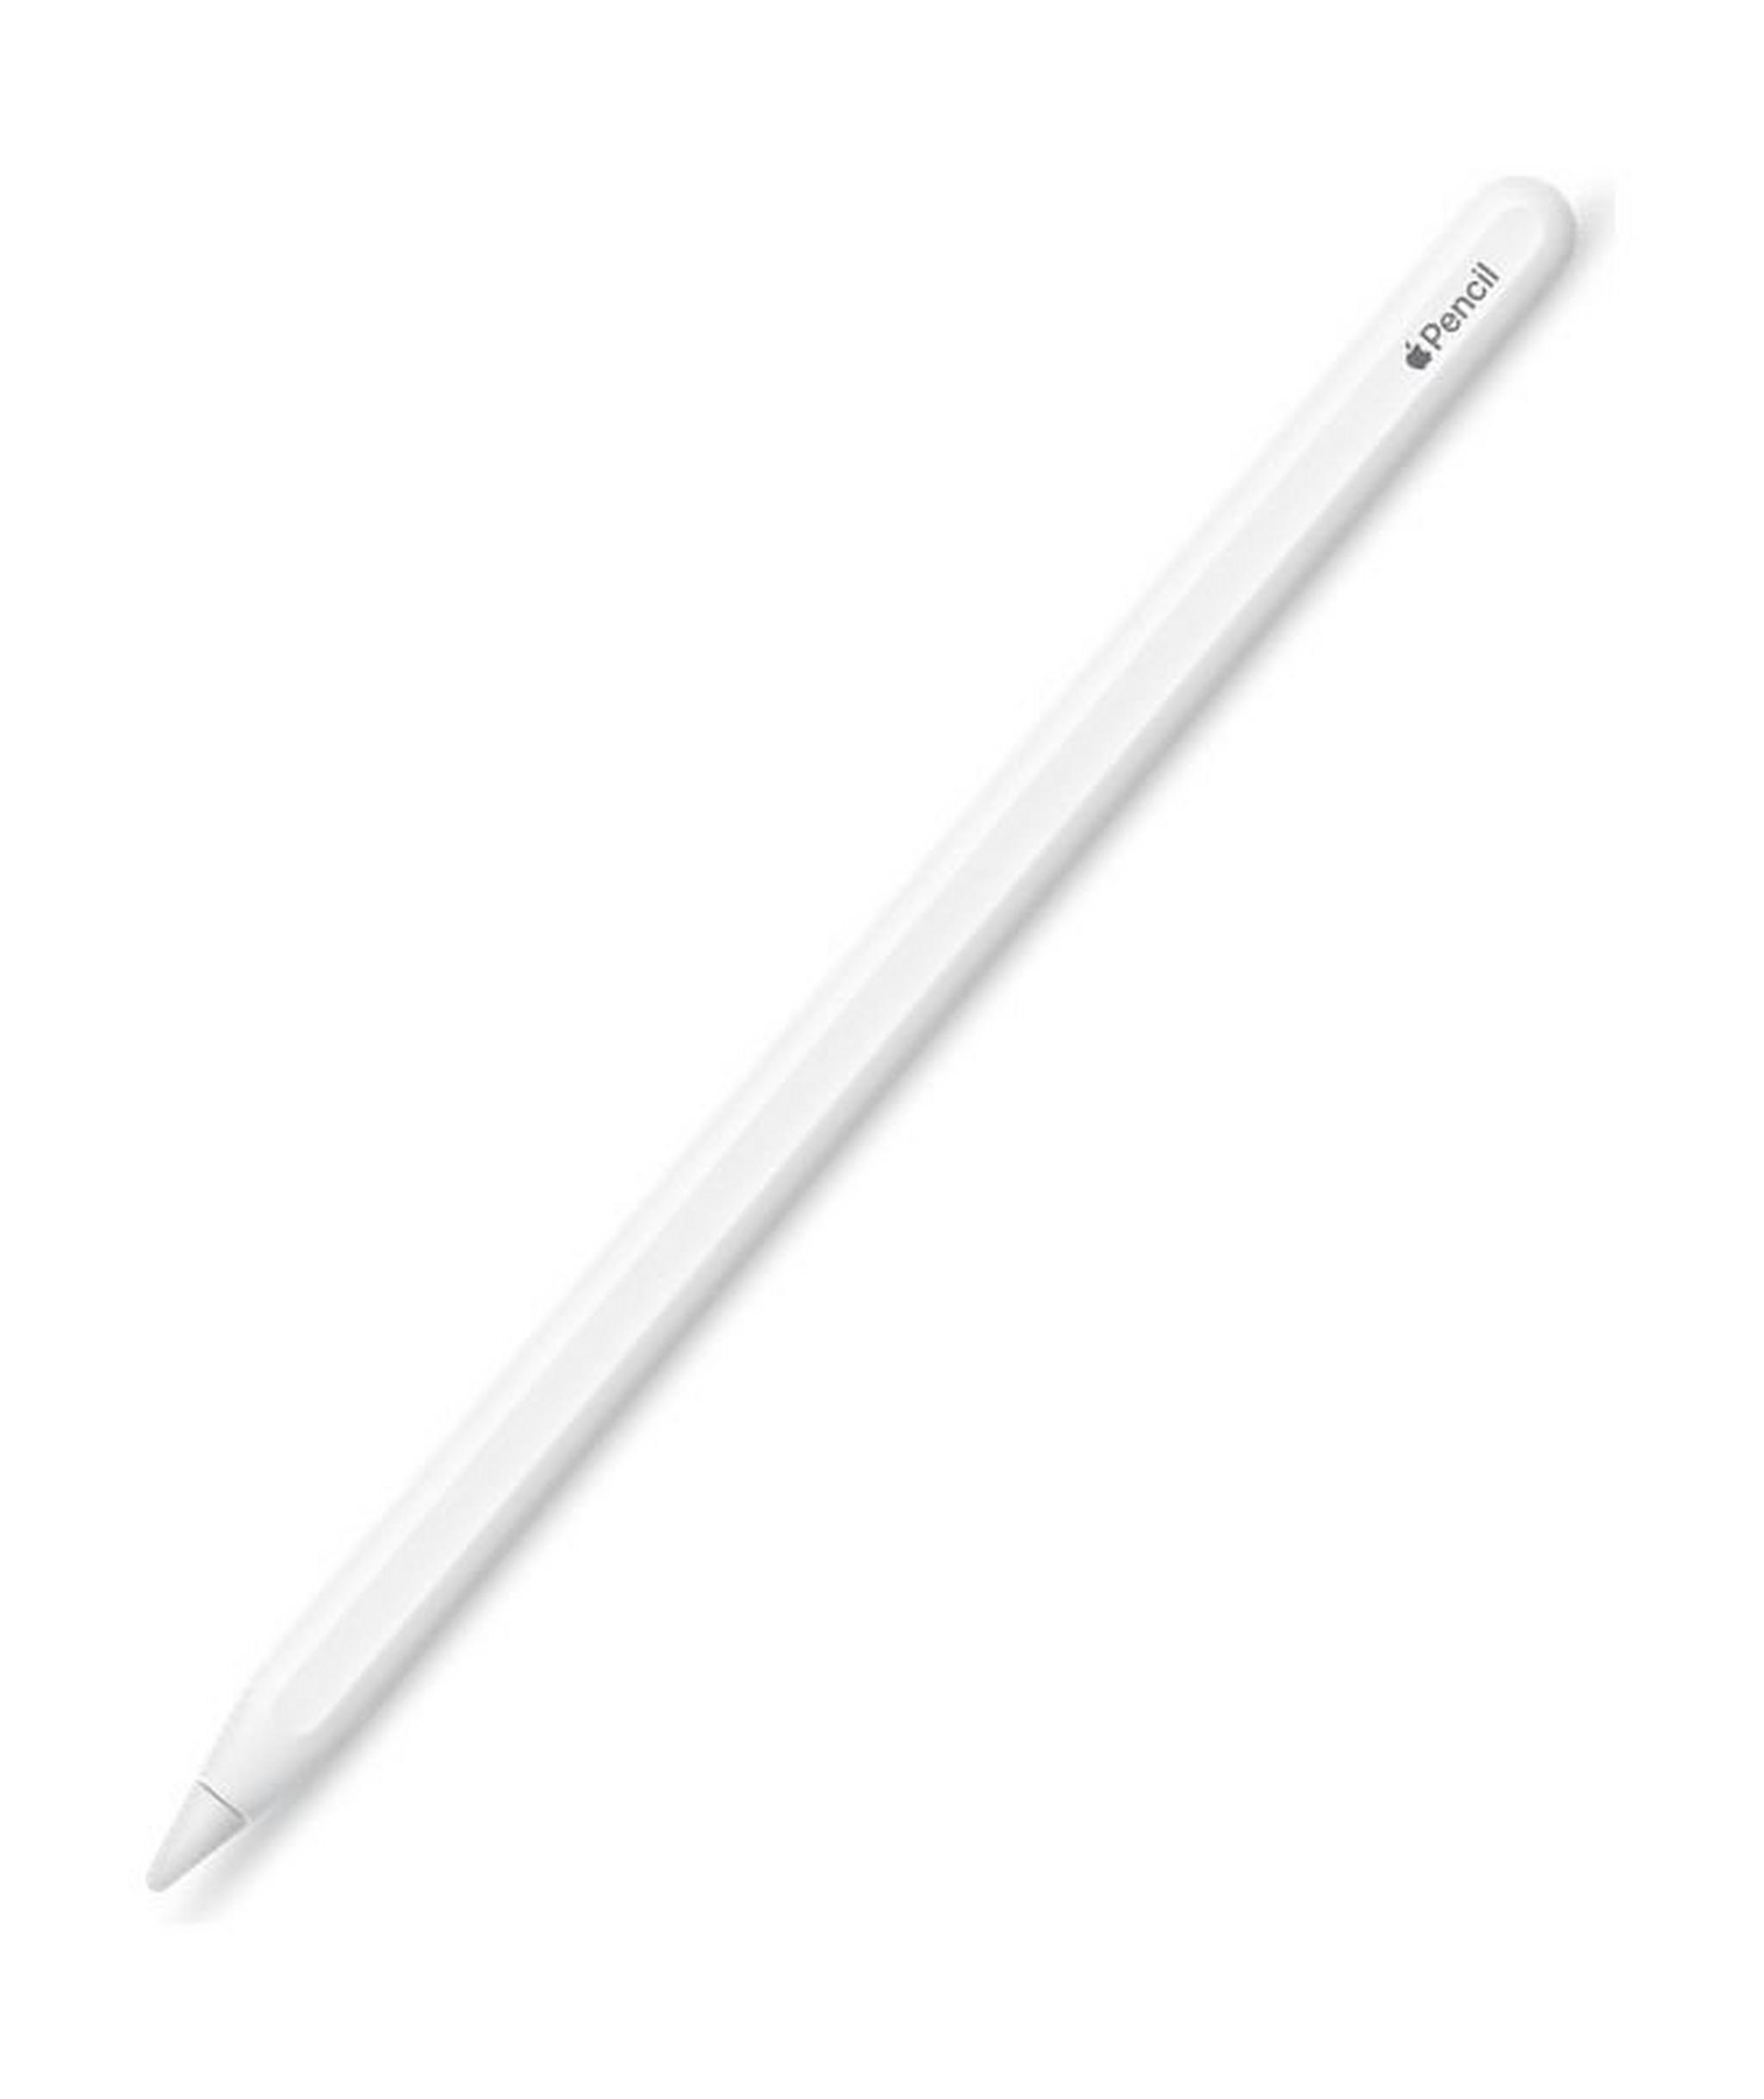 Apple Pencil 2nd Generation, MU8F2ZM/A - White